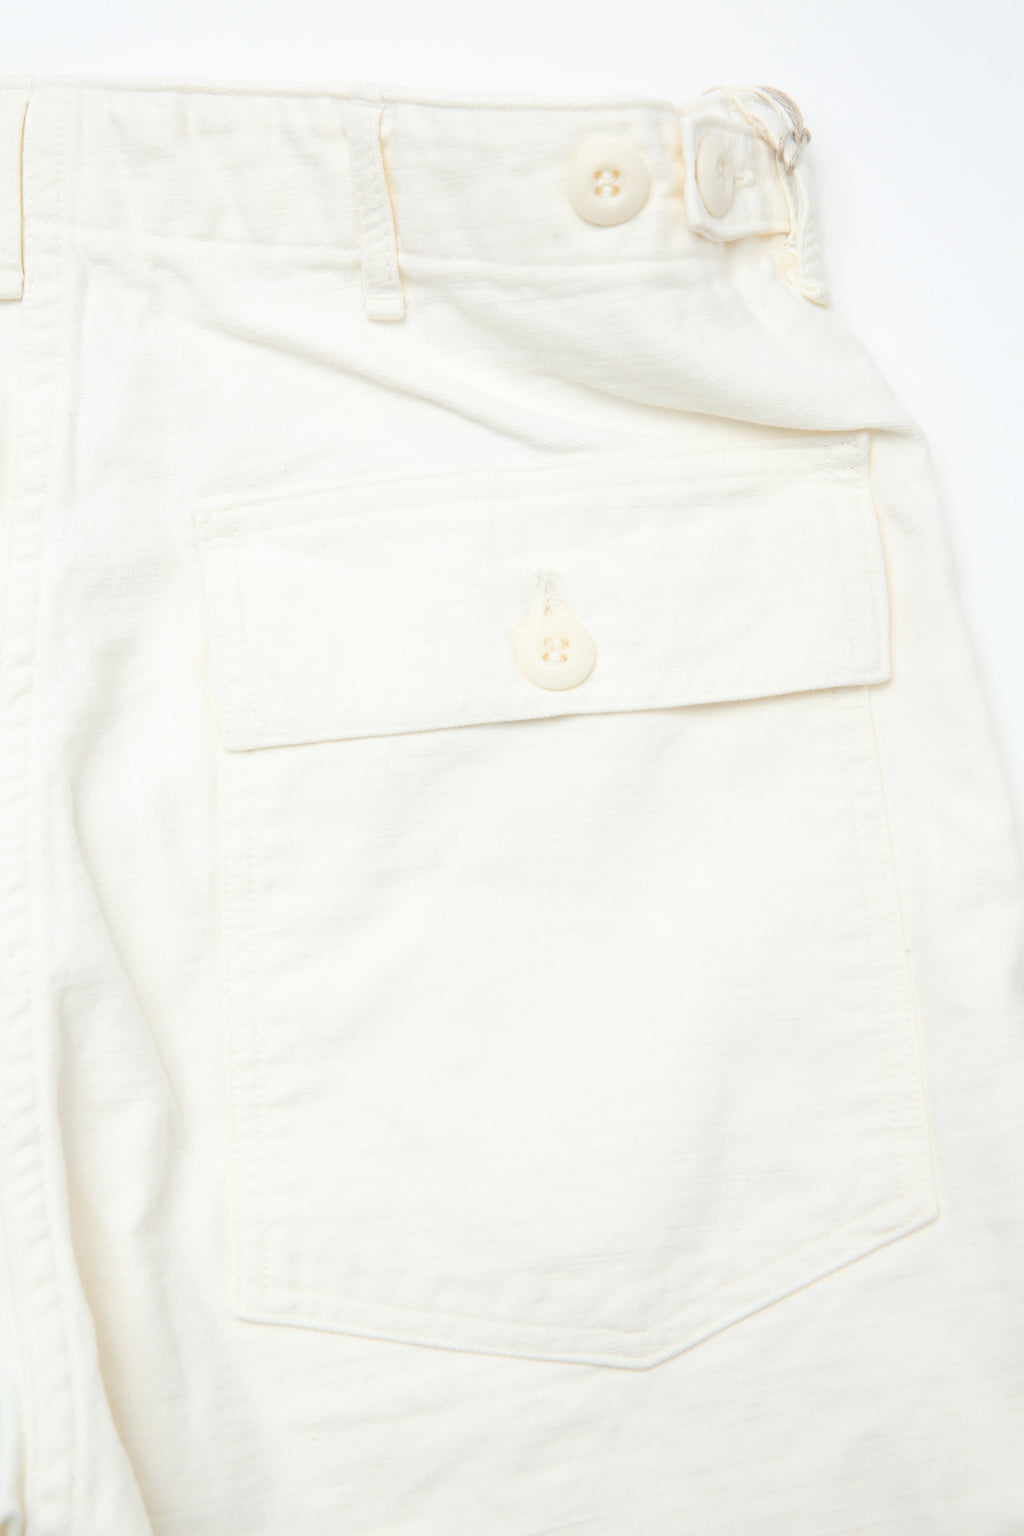 Off-White Block Printed Textured Cotton Drawstring Pant – 11.11